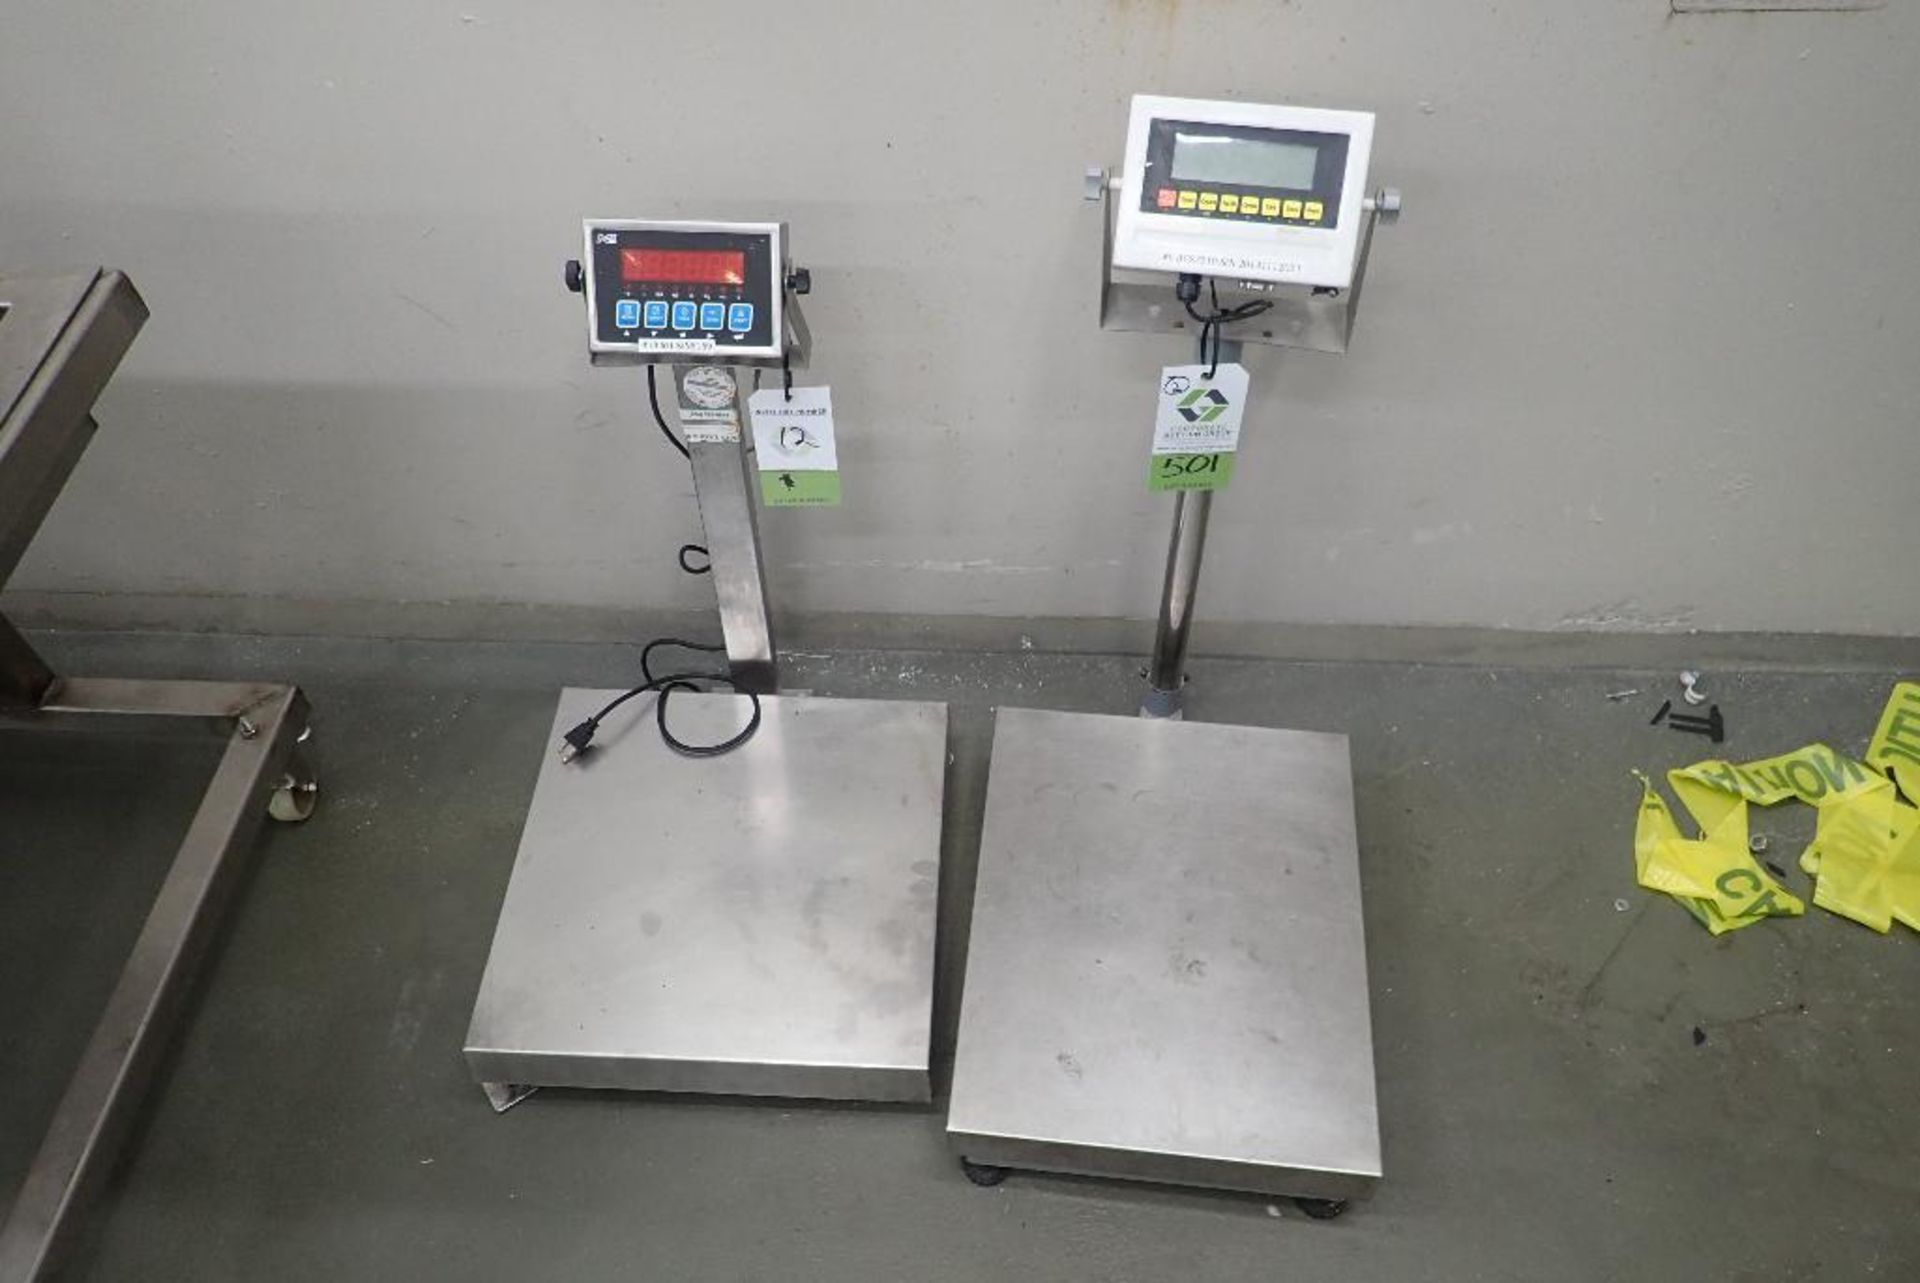 Intertek Model M1 bench scale, 18 in. x 18 in. platform, 2014 Weighing Indicator type LP7510 bench s